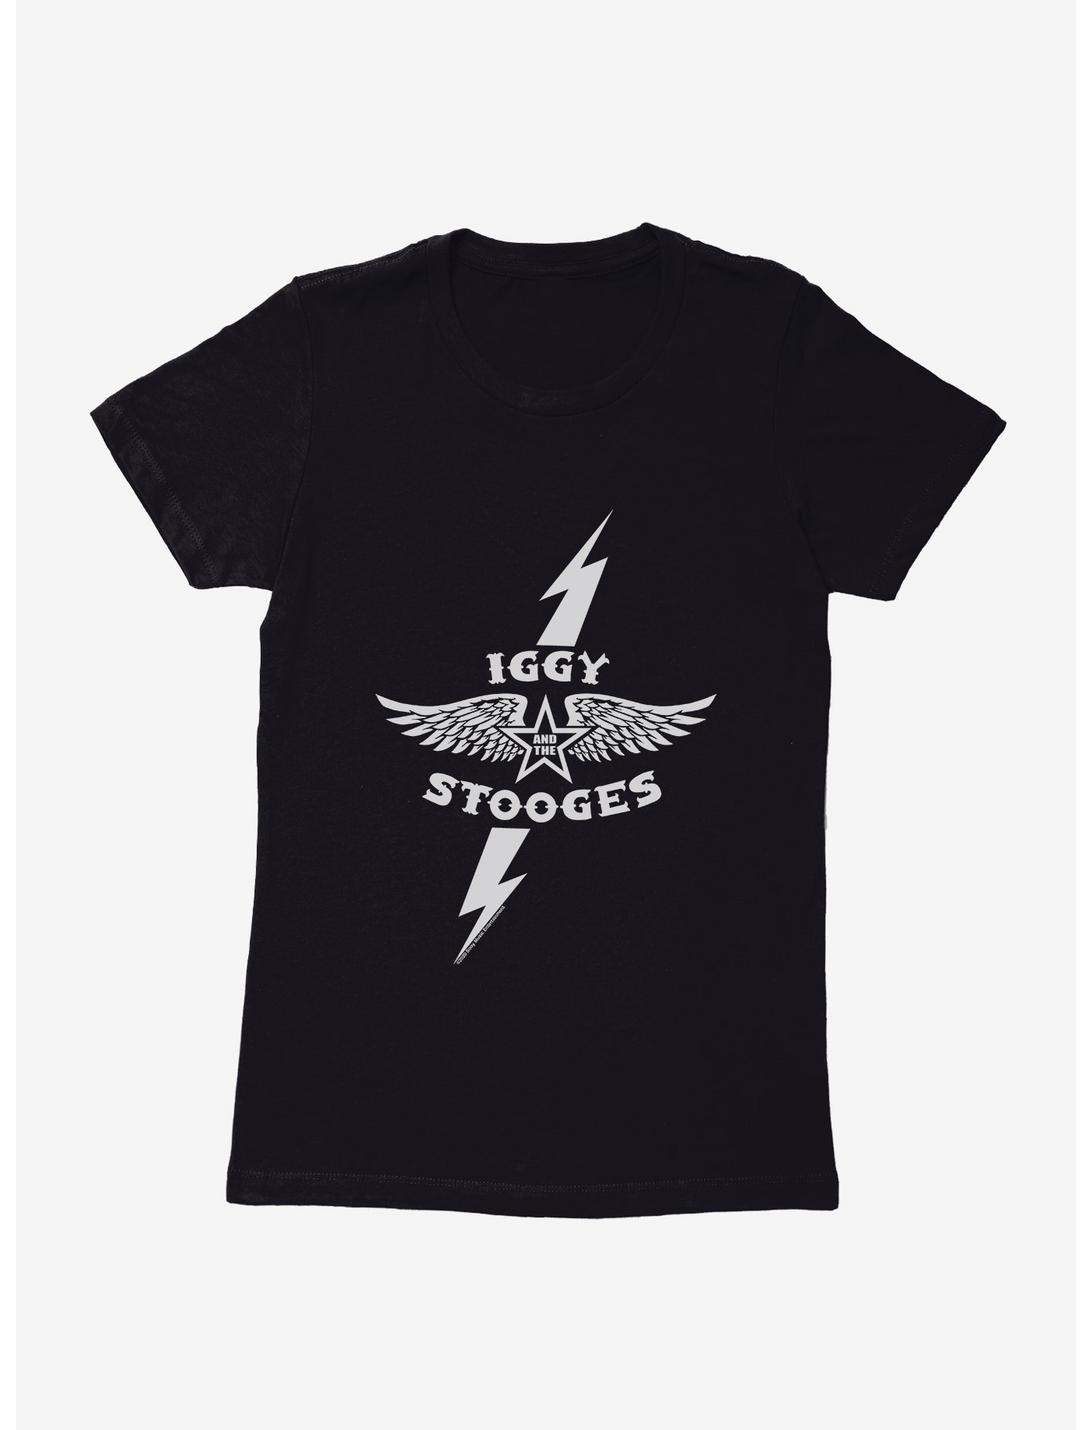 Plus Size Iggy Pop Stooges Womens T-Shirt, , hi-res